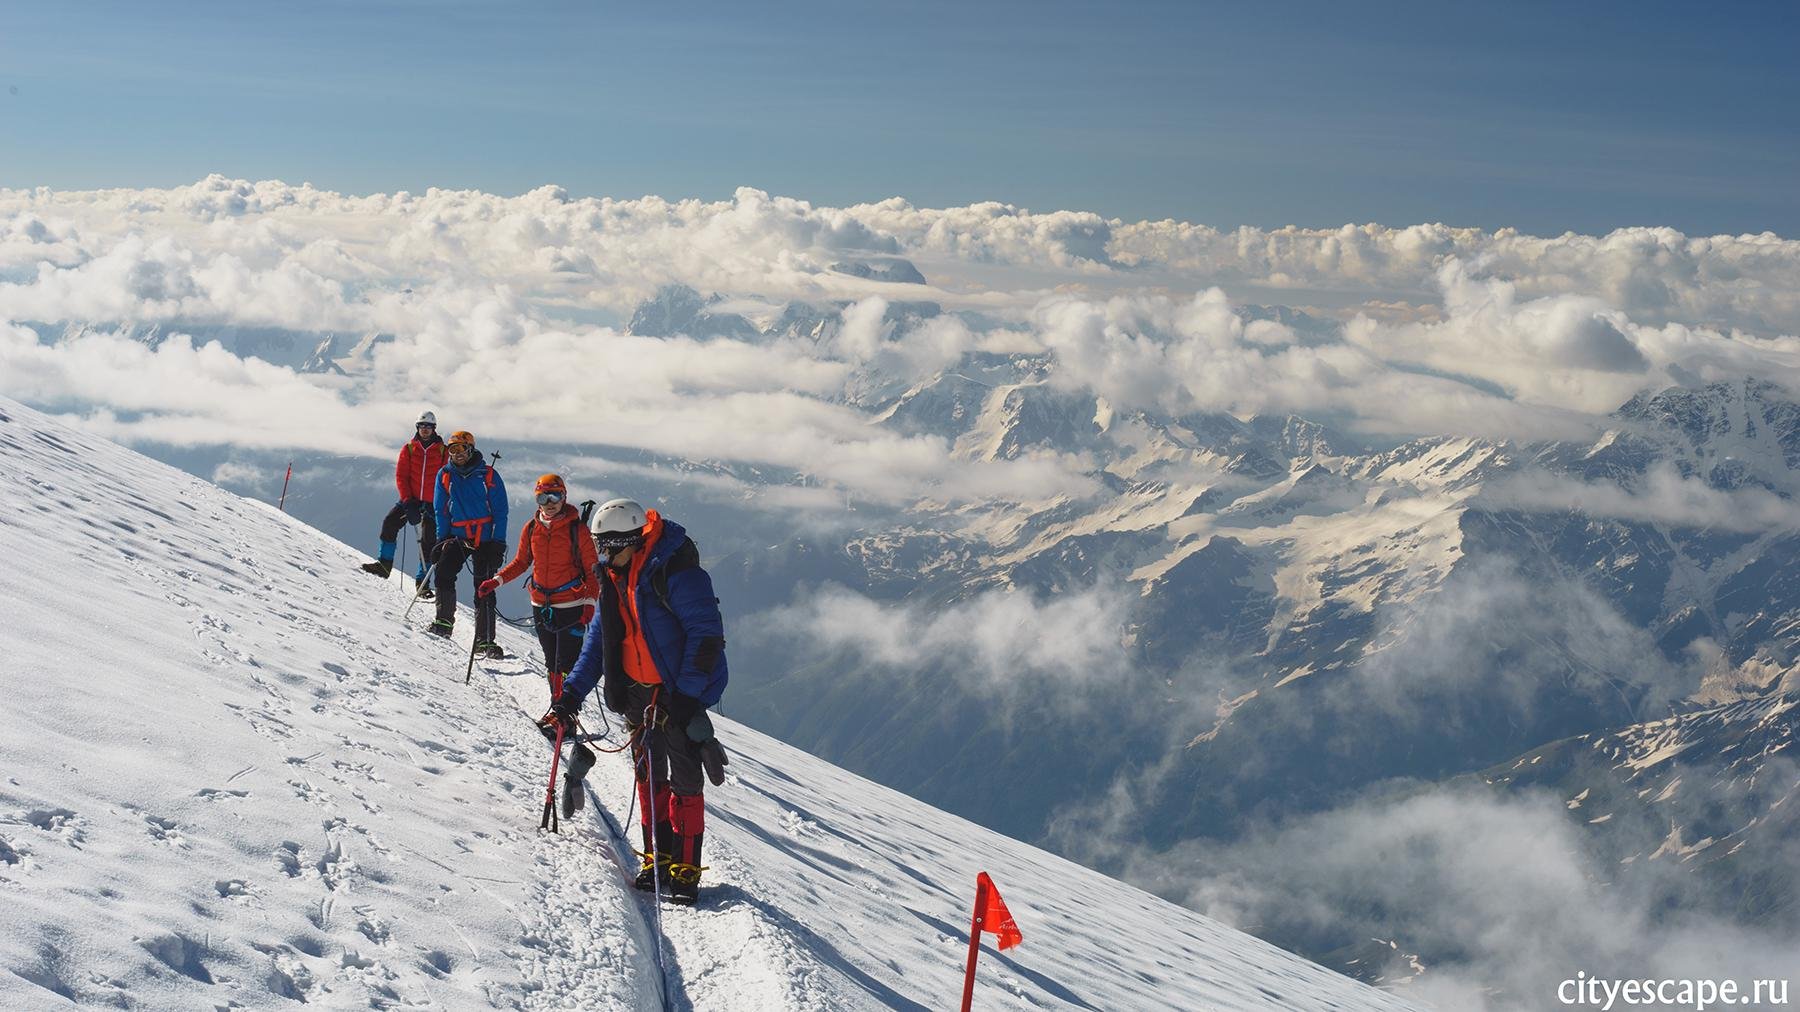 3 вершины эльбруса. Эльбрус с Юга скалы Пастухова. Восхождение на Эльбрус с Юга. Восхождение на вершину Эльбруса. Эльбрус Южный склон.